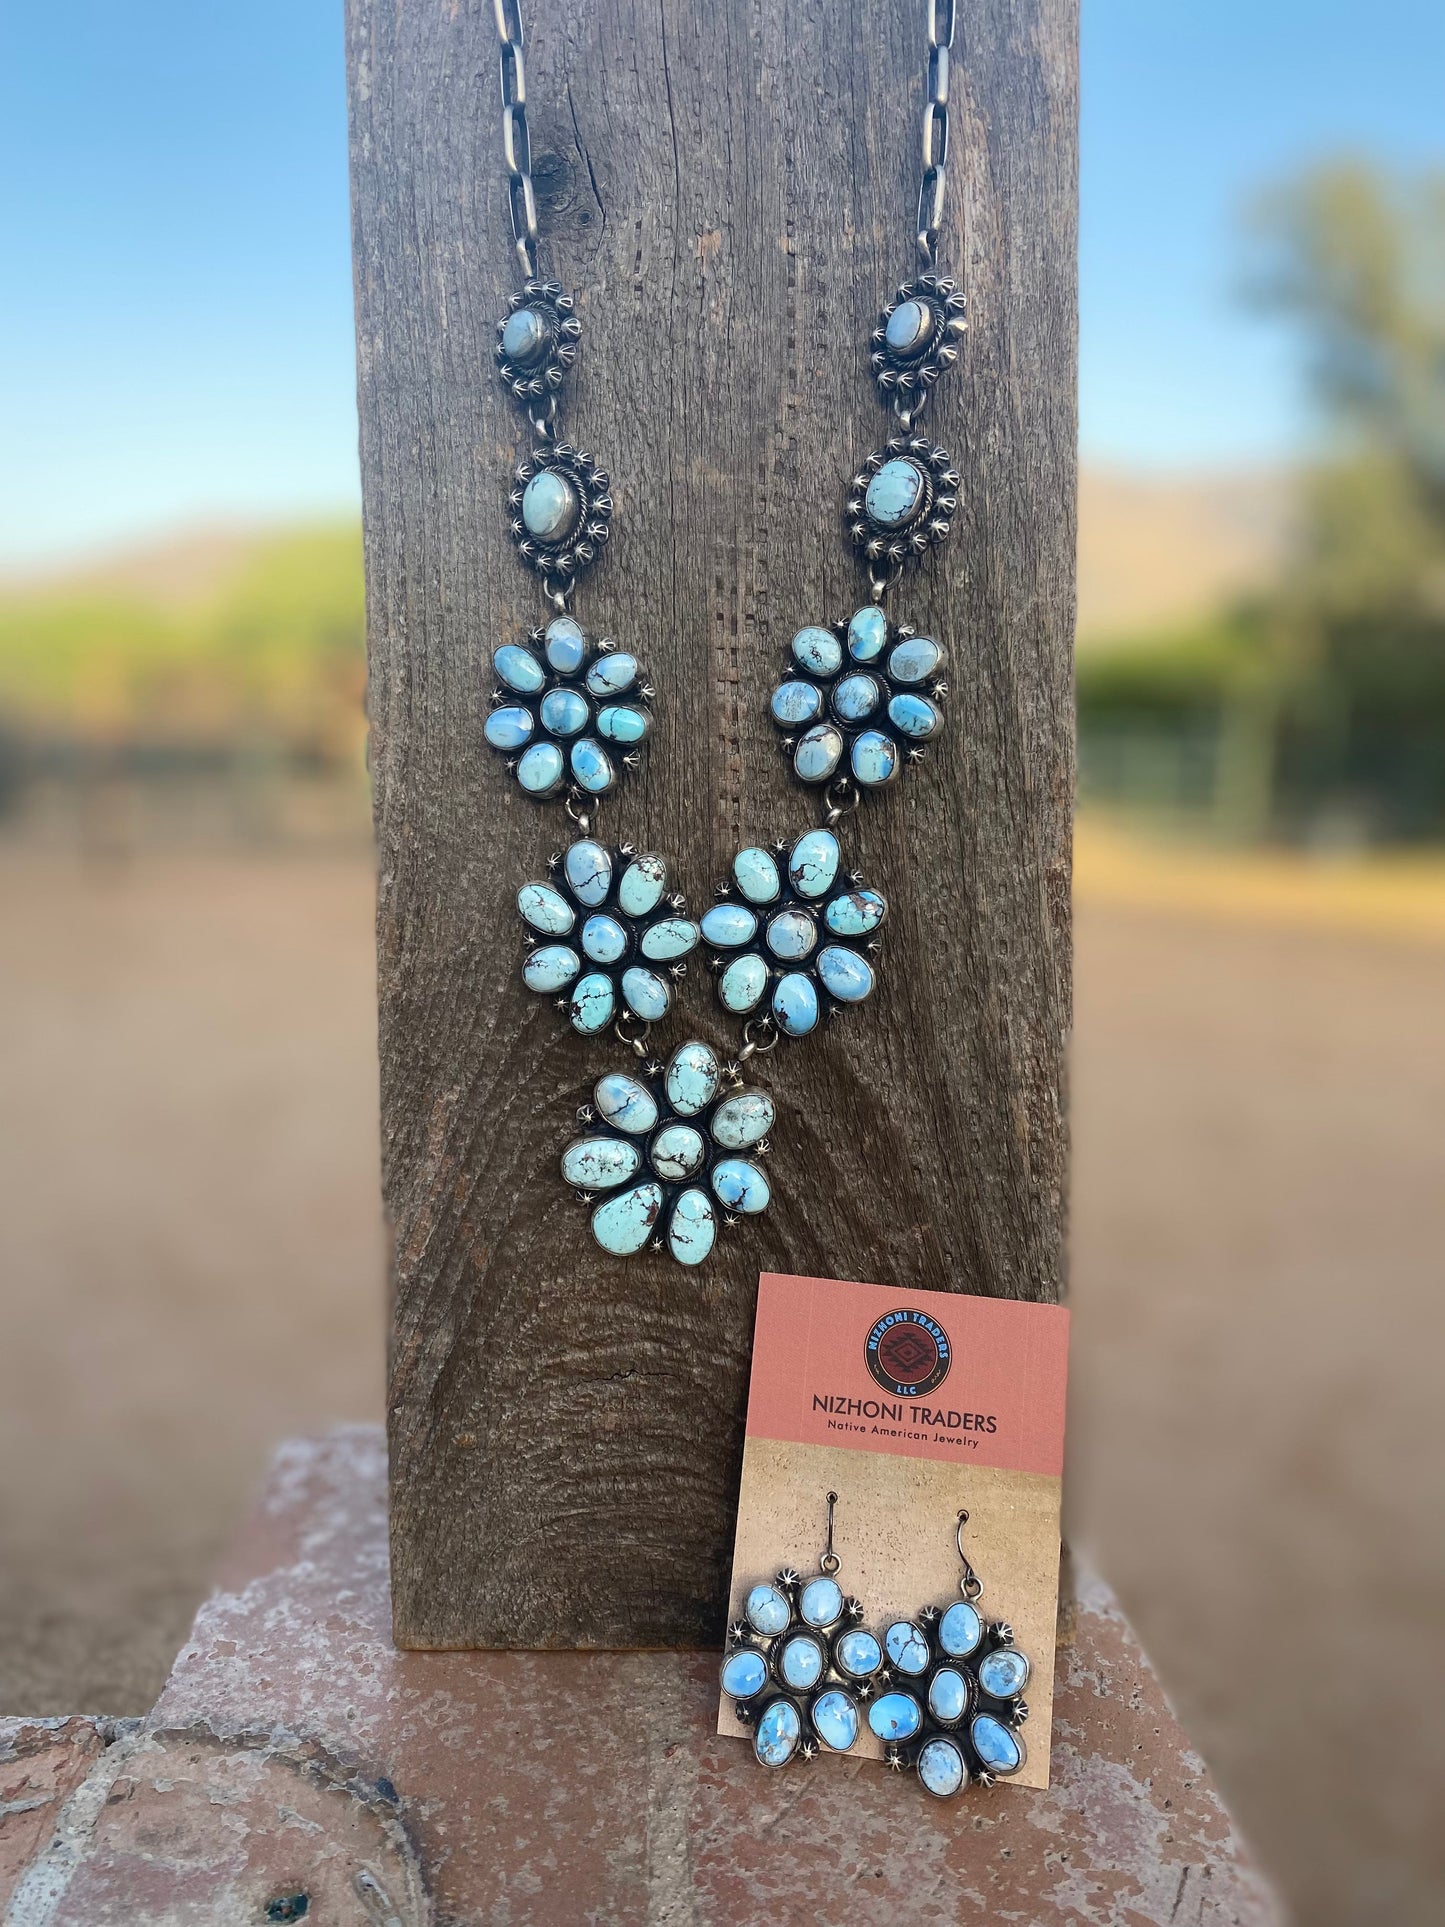 Amazing Navajo Golden Hills Turquoise & Sterling Pendant Set Signed